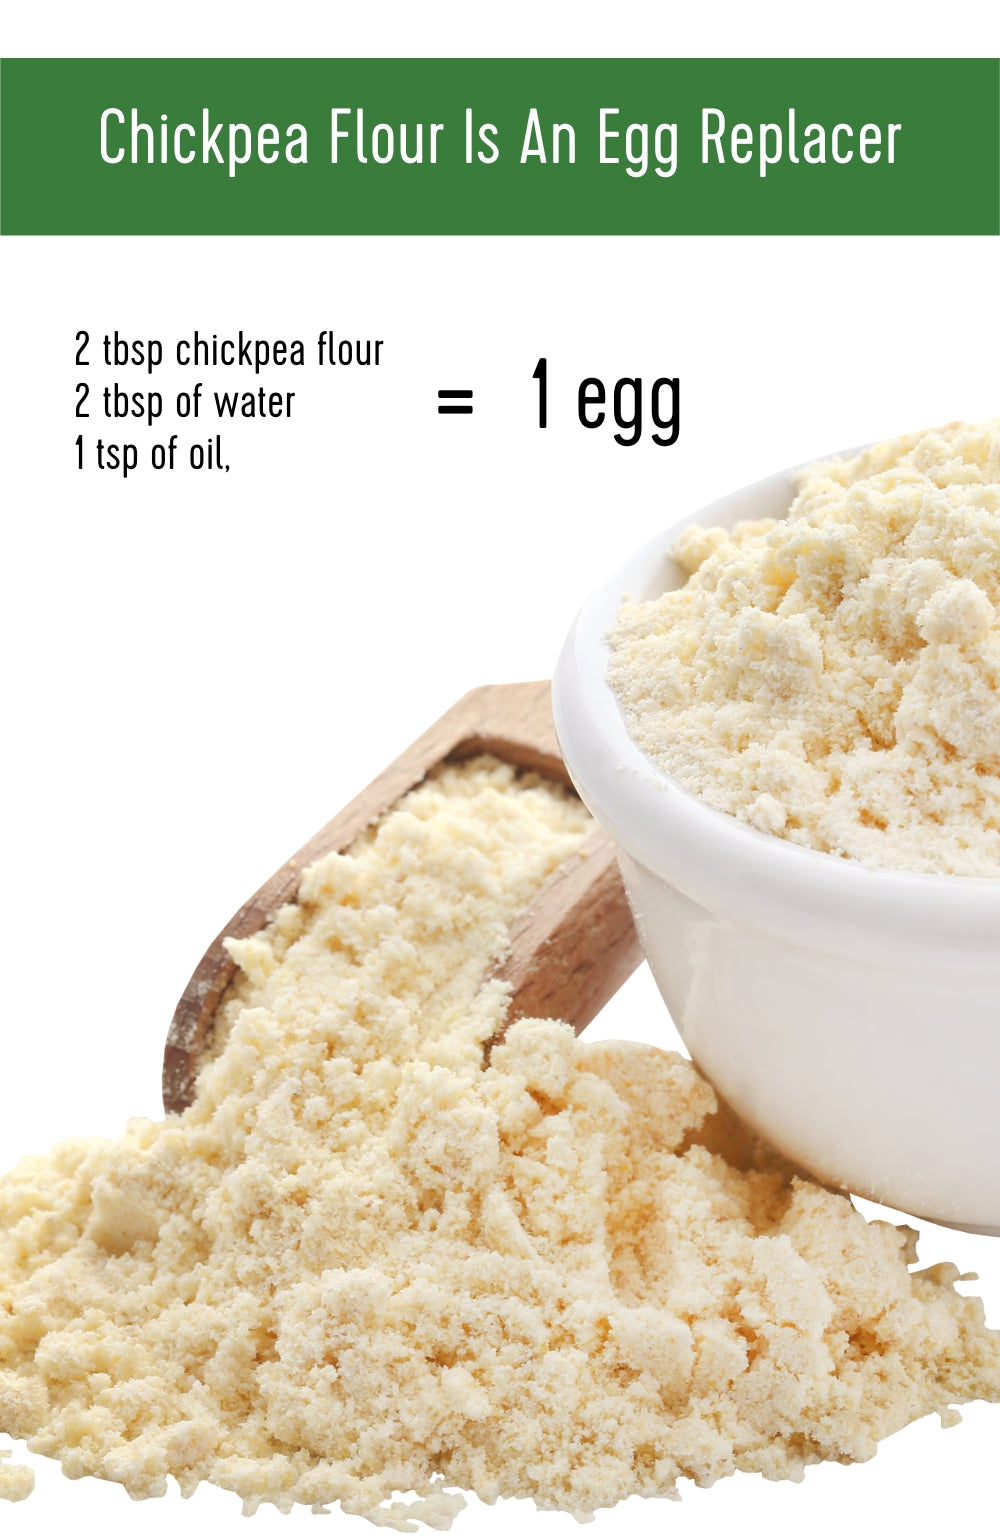 Chickpea Flour Bundle | 9 LBS